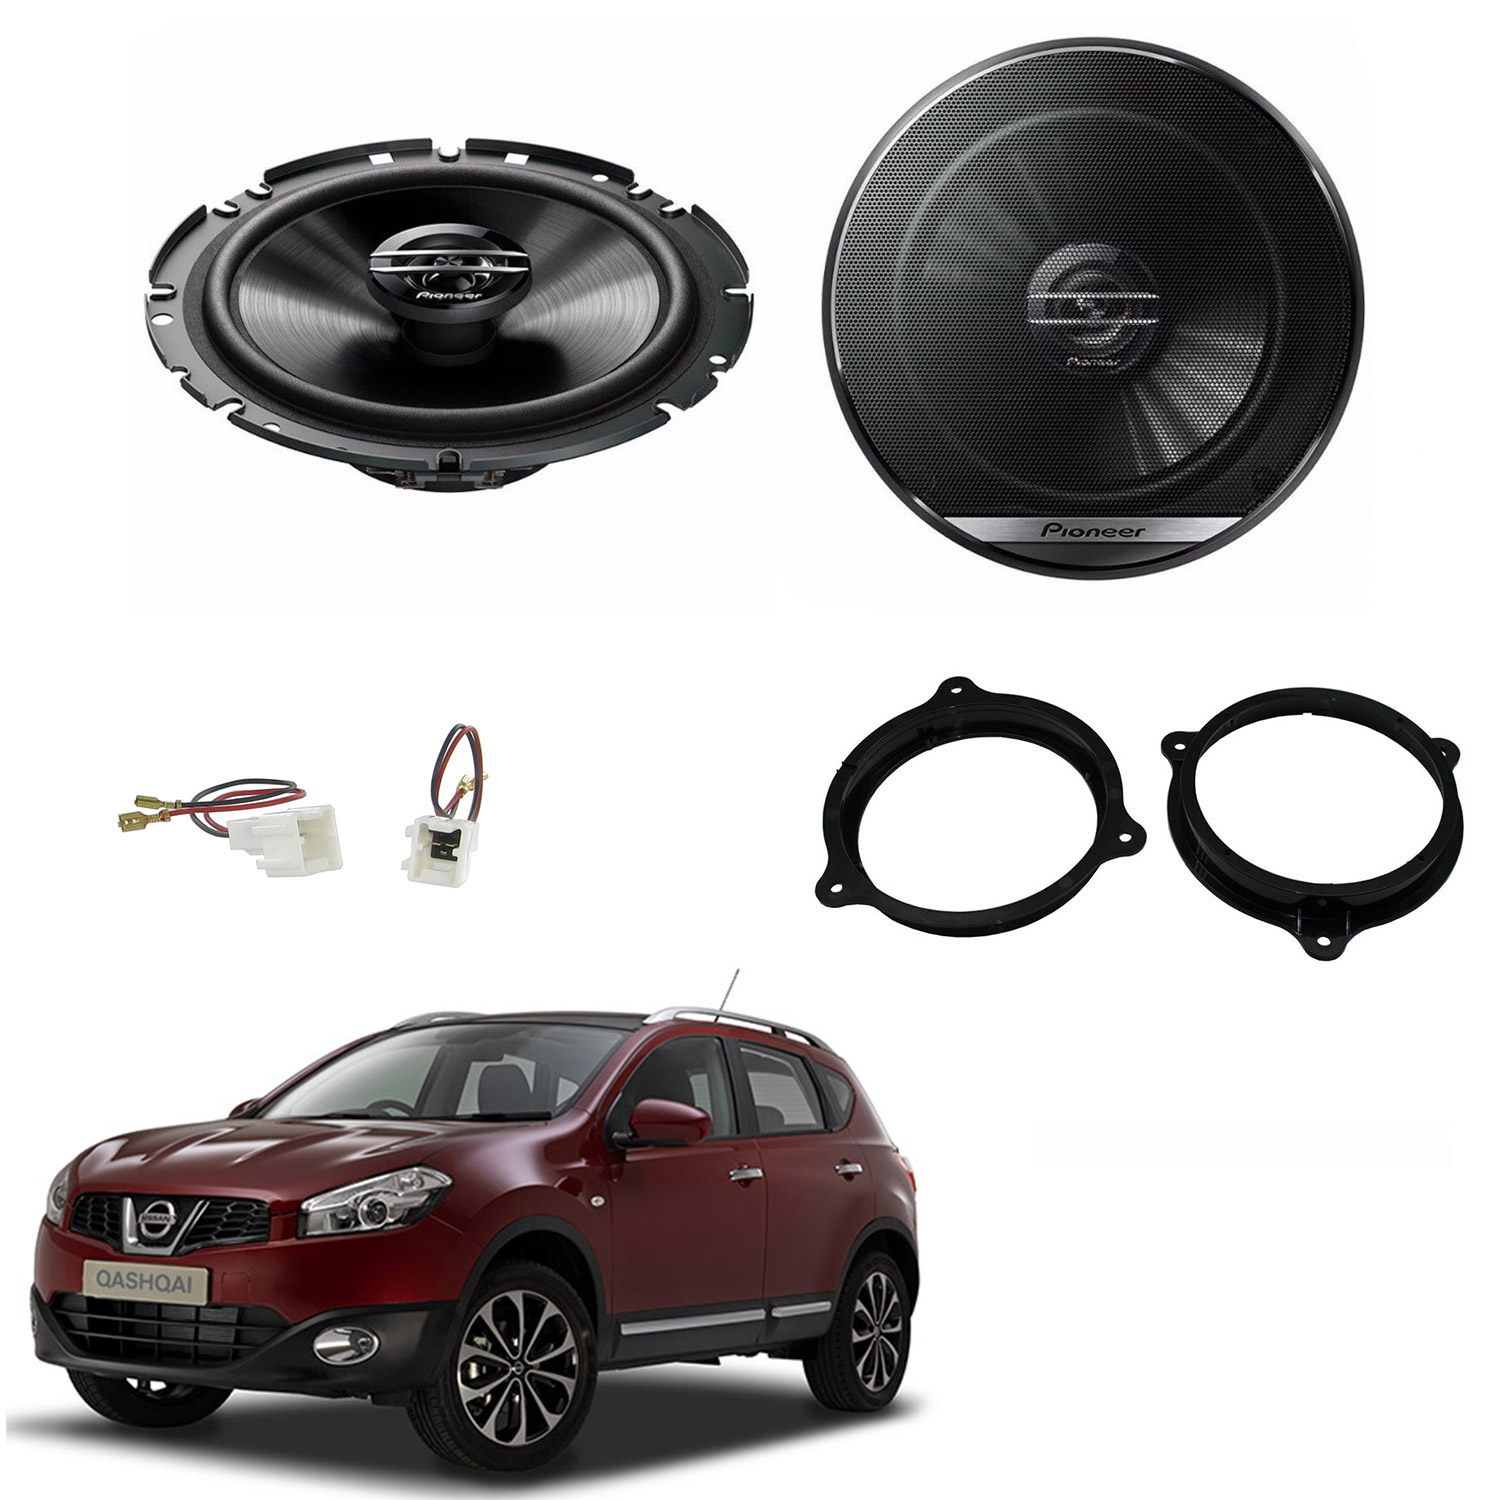 https://www.dynamicsounds.co.uk/image/catalog/products/Speaker/Speaker-kit/Nissan/pioneer-nissan-kit-qashqai.jpg